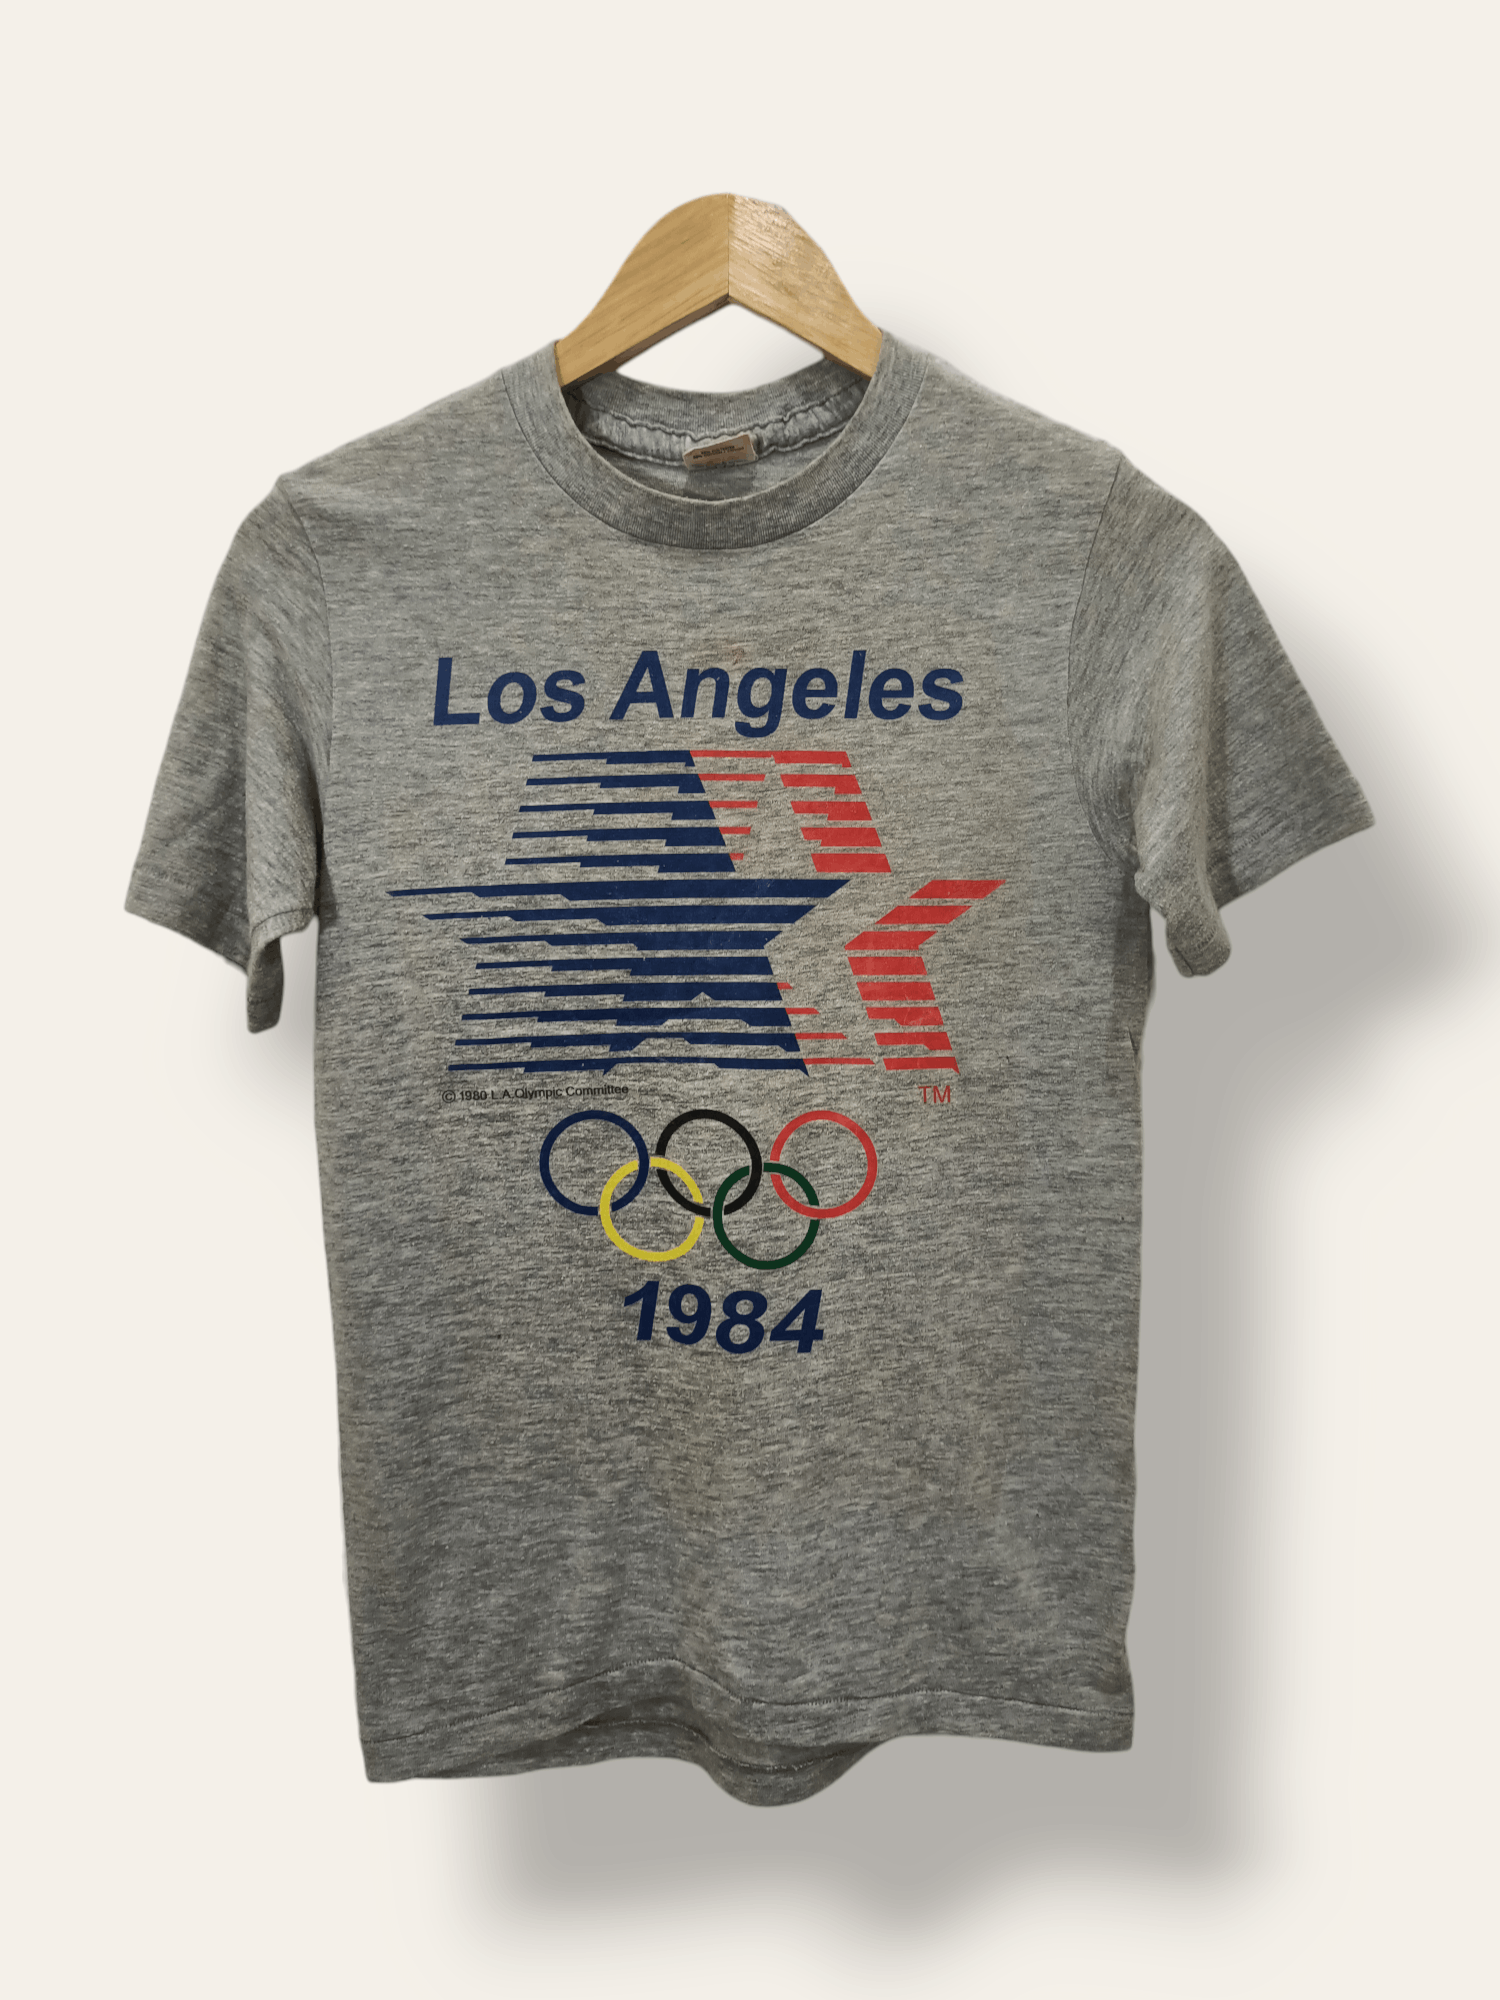 Rare Vintage 1984 Olympics Los Angeles Graphic Tee - 1